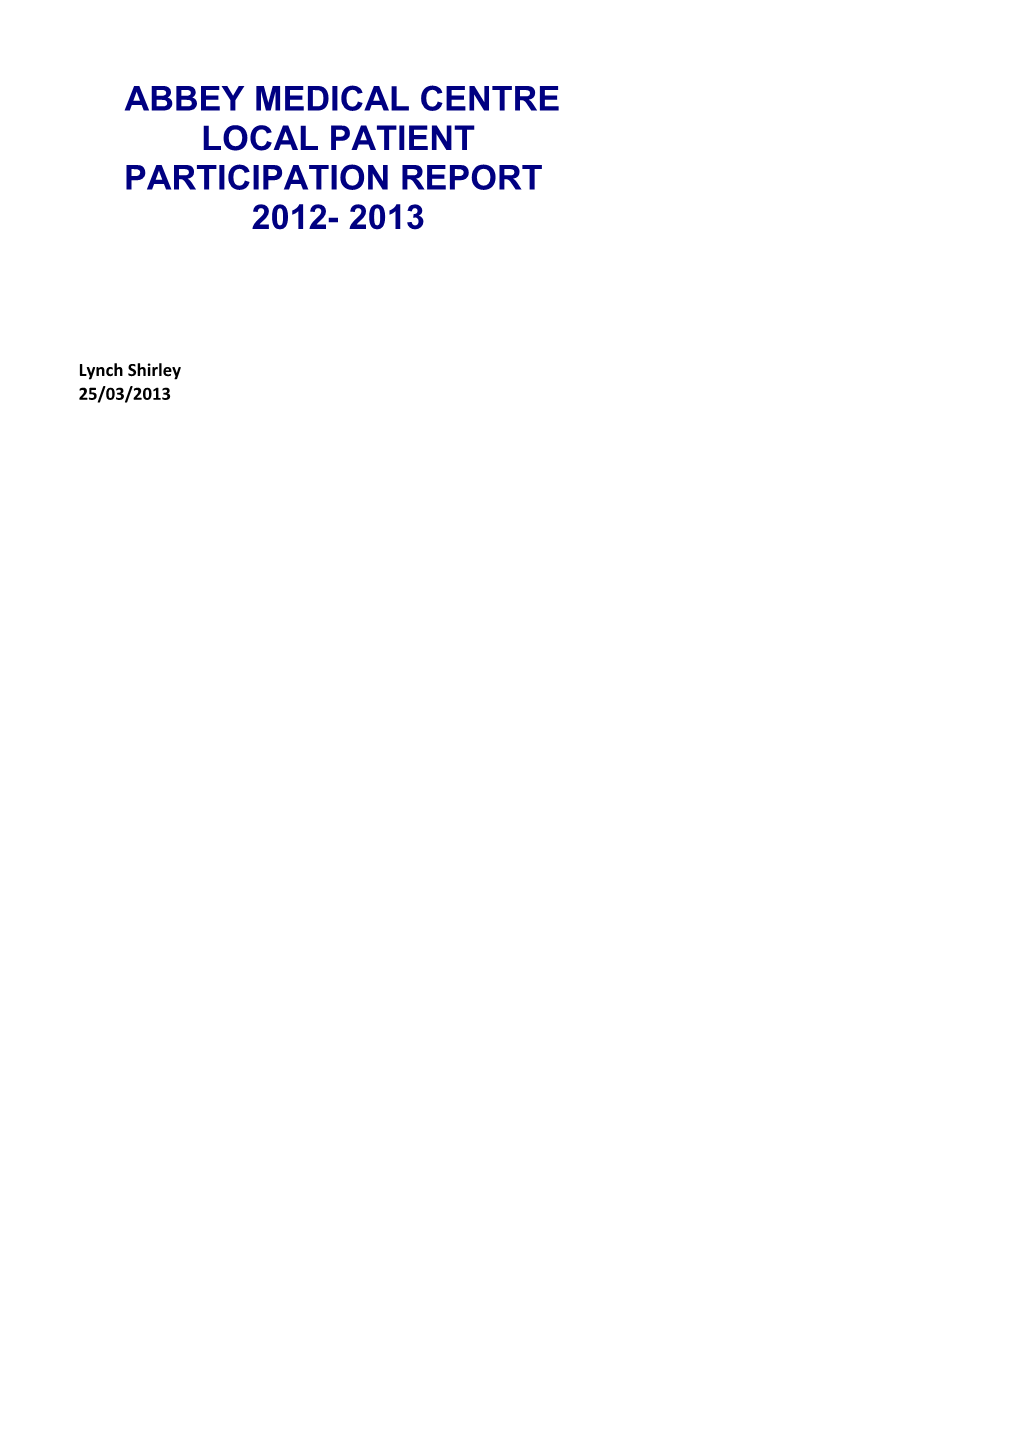 Abbey Medical Centre Local Patient Participation Report 2012- 2013